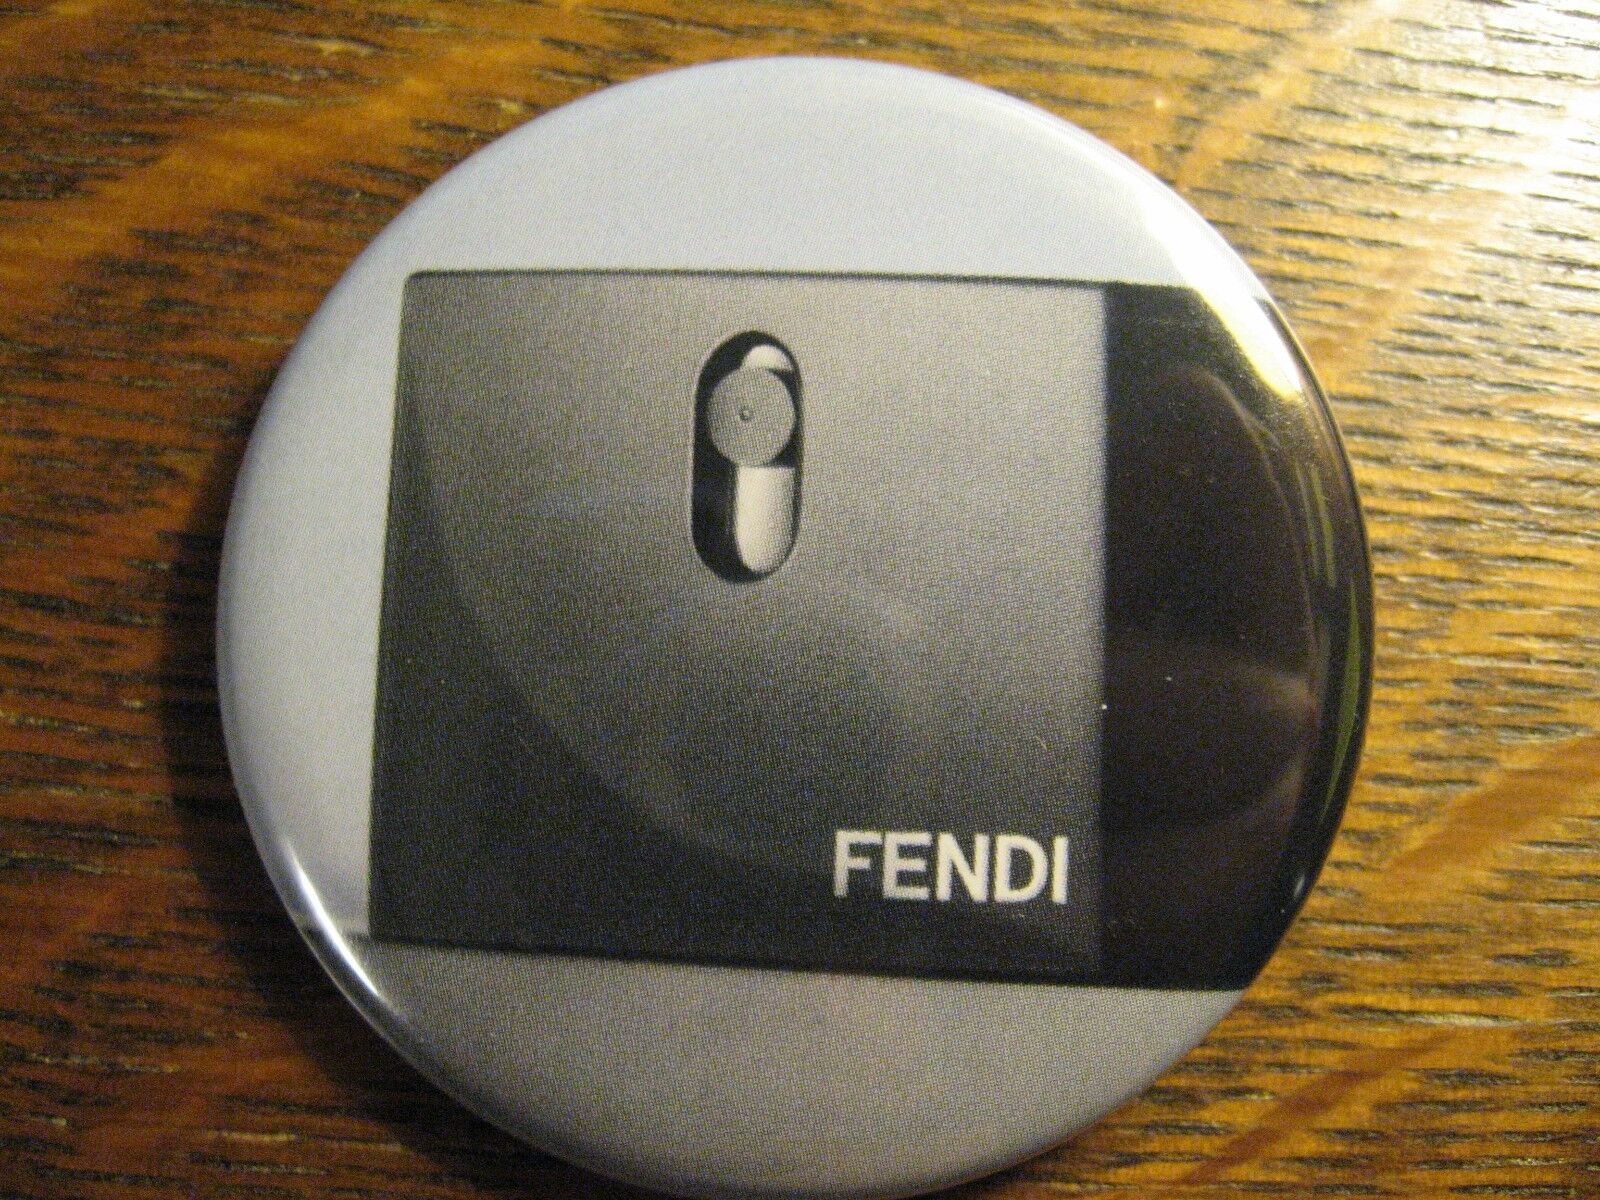 Fendi Pocket Mirror - Repurposed Italian Designer Magazine Ad Lipstick Mirror